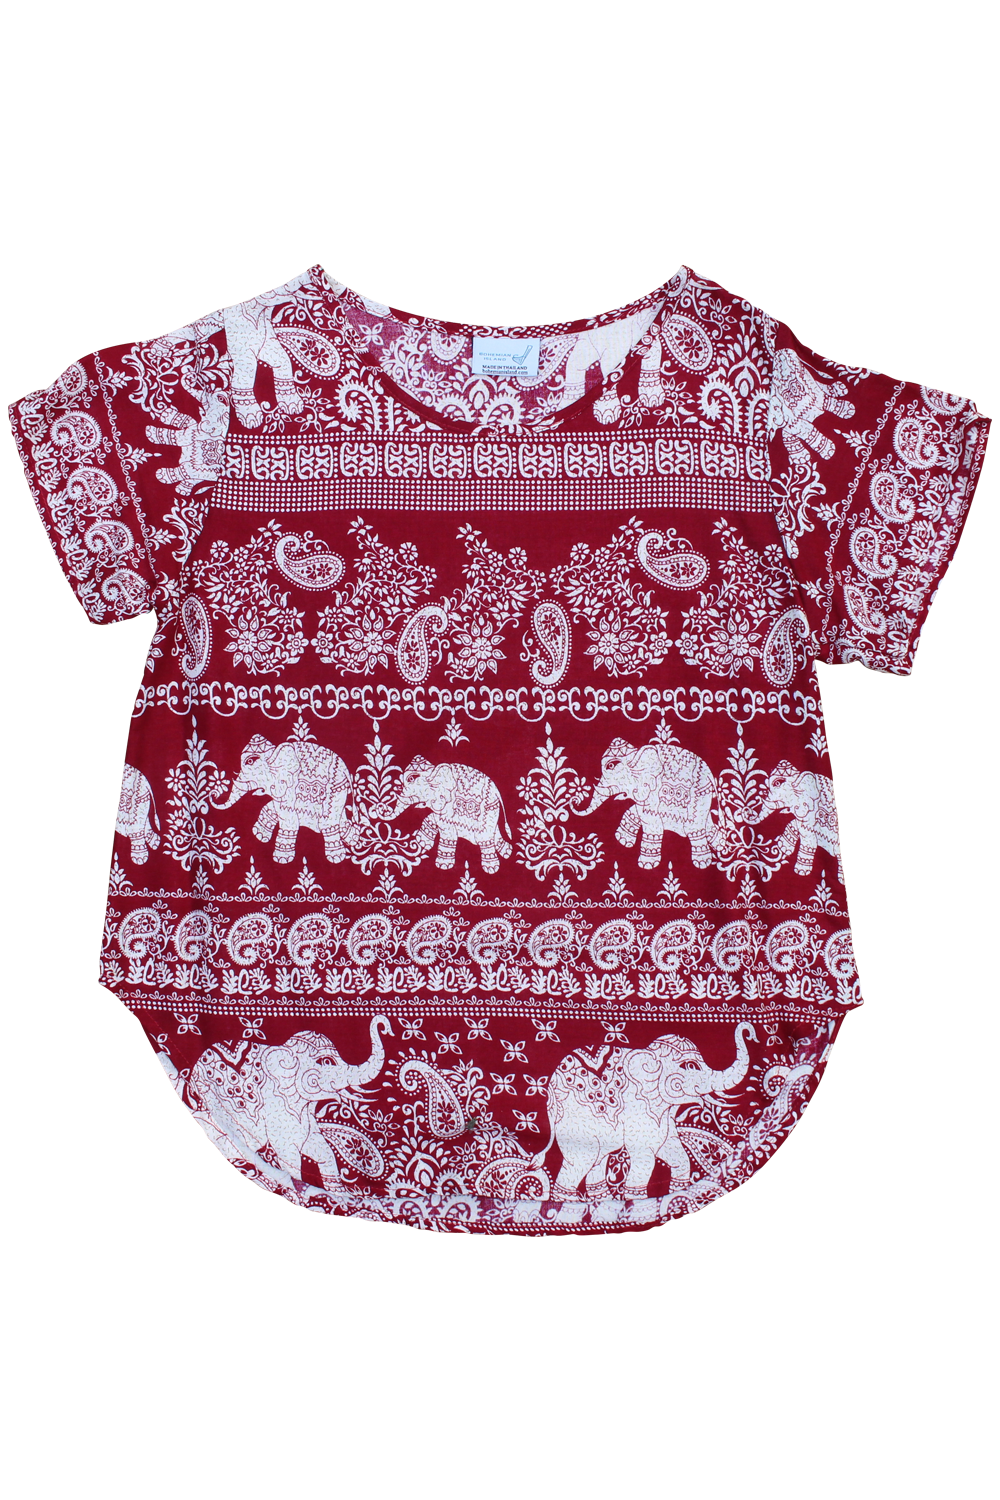 peerada elephant womens cotton shirt bohemian island